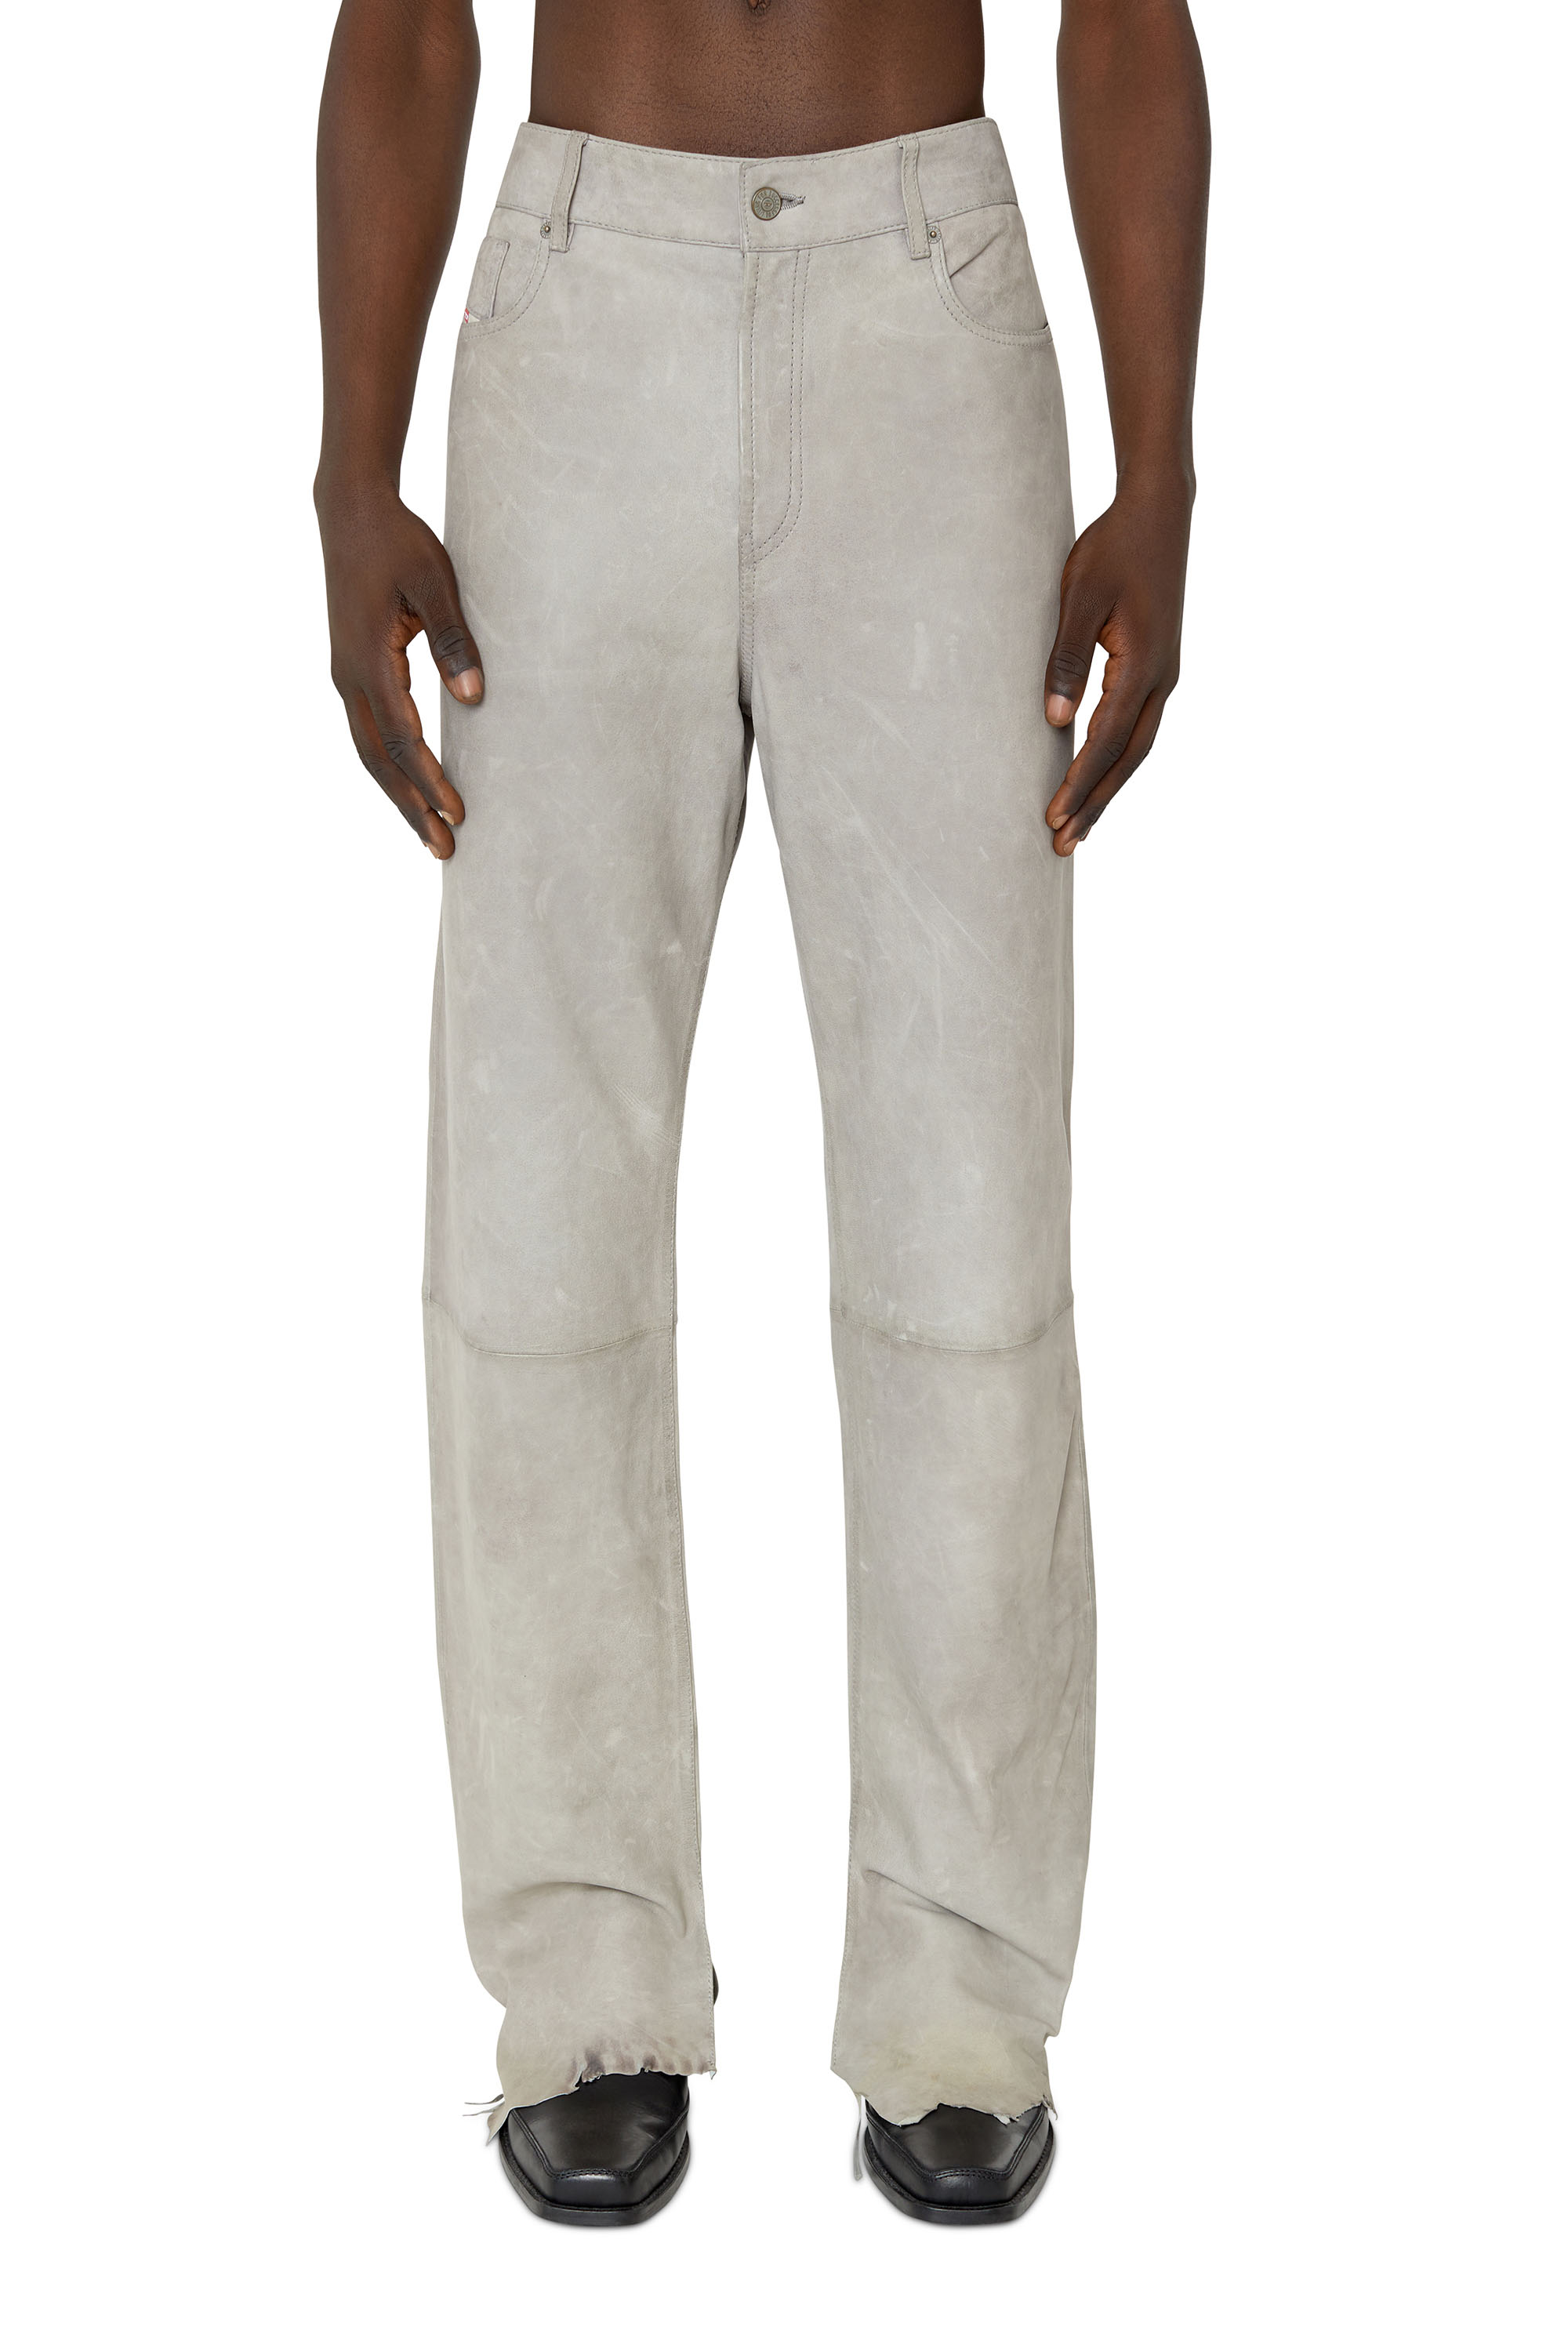 Men's Pants: Chino, Trousers, Sweat | Shop on Diesel.com